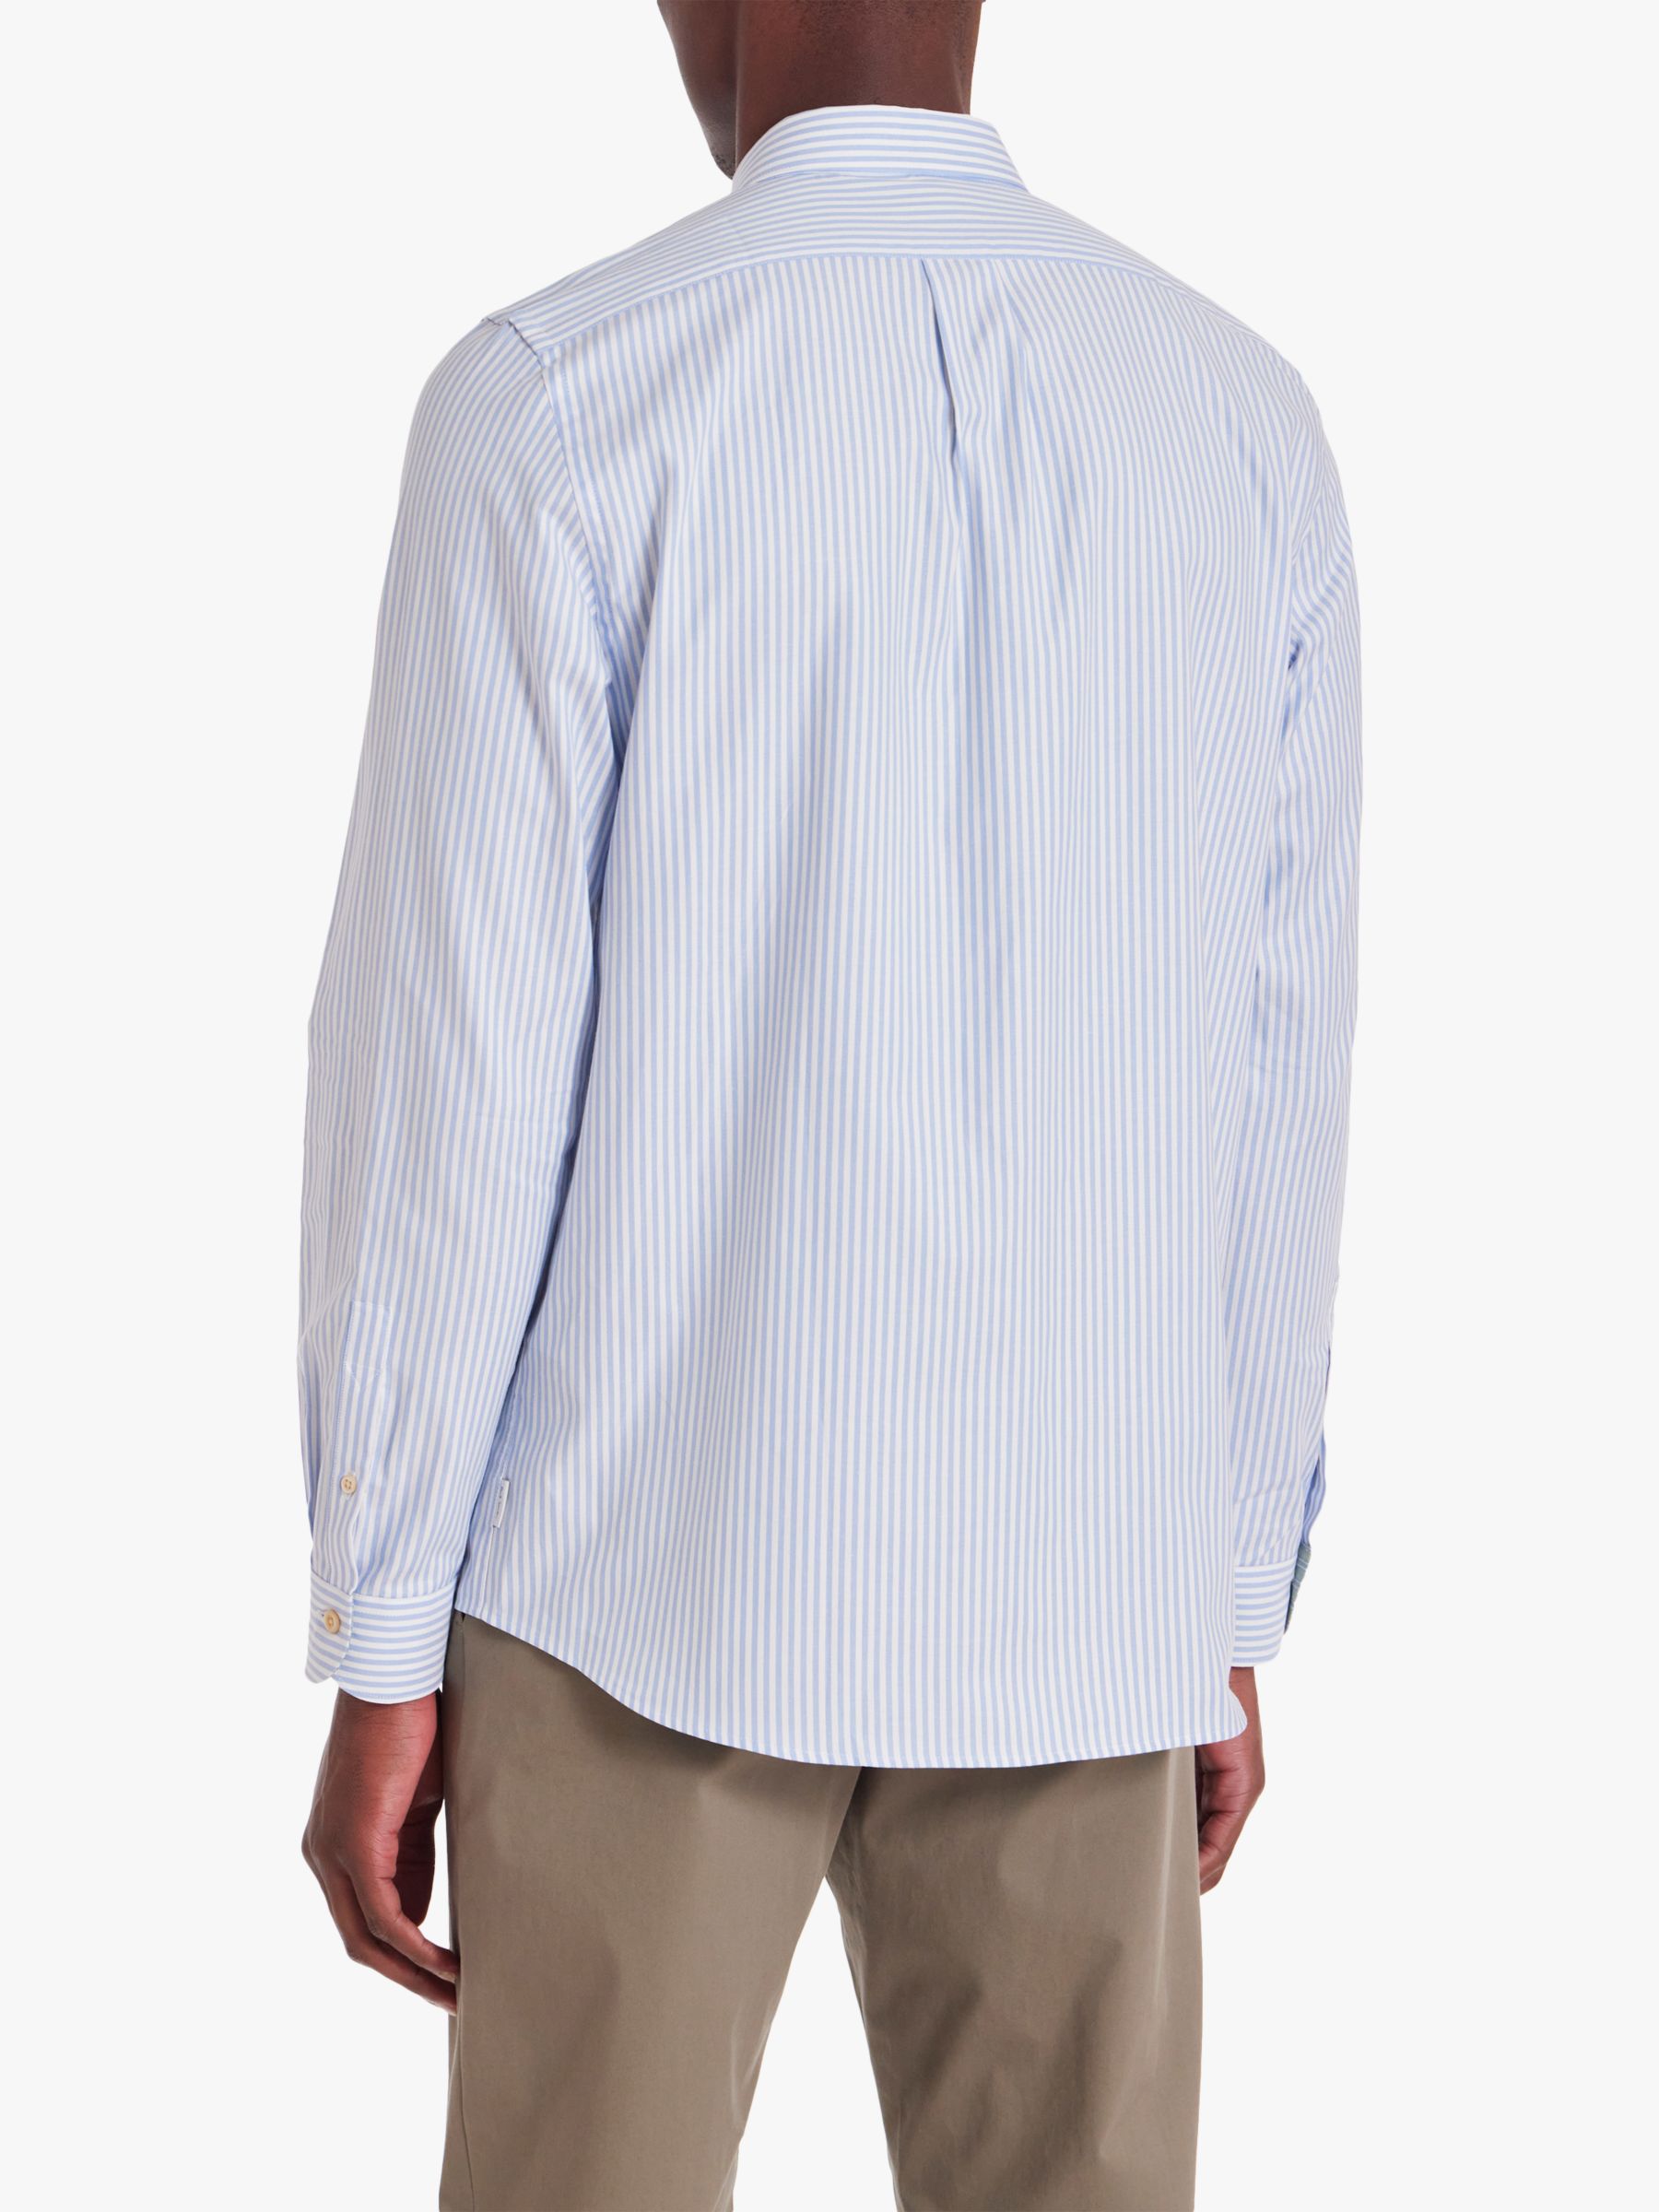 Paul Smith Long Sleeve Regular Stripe Shirt, Blue, M